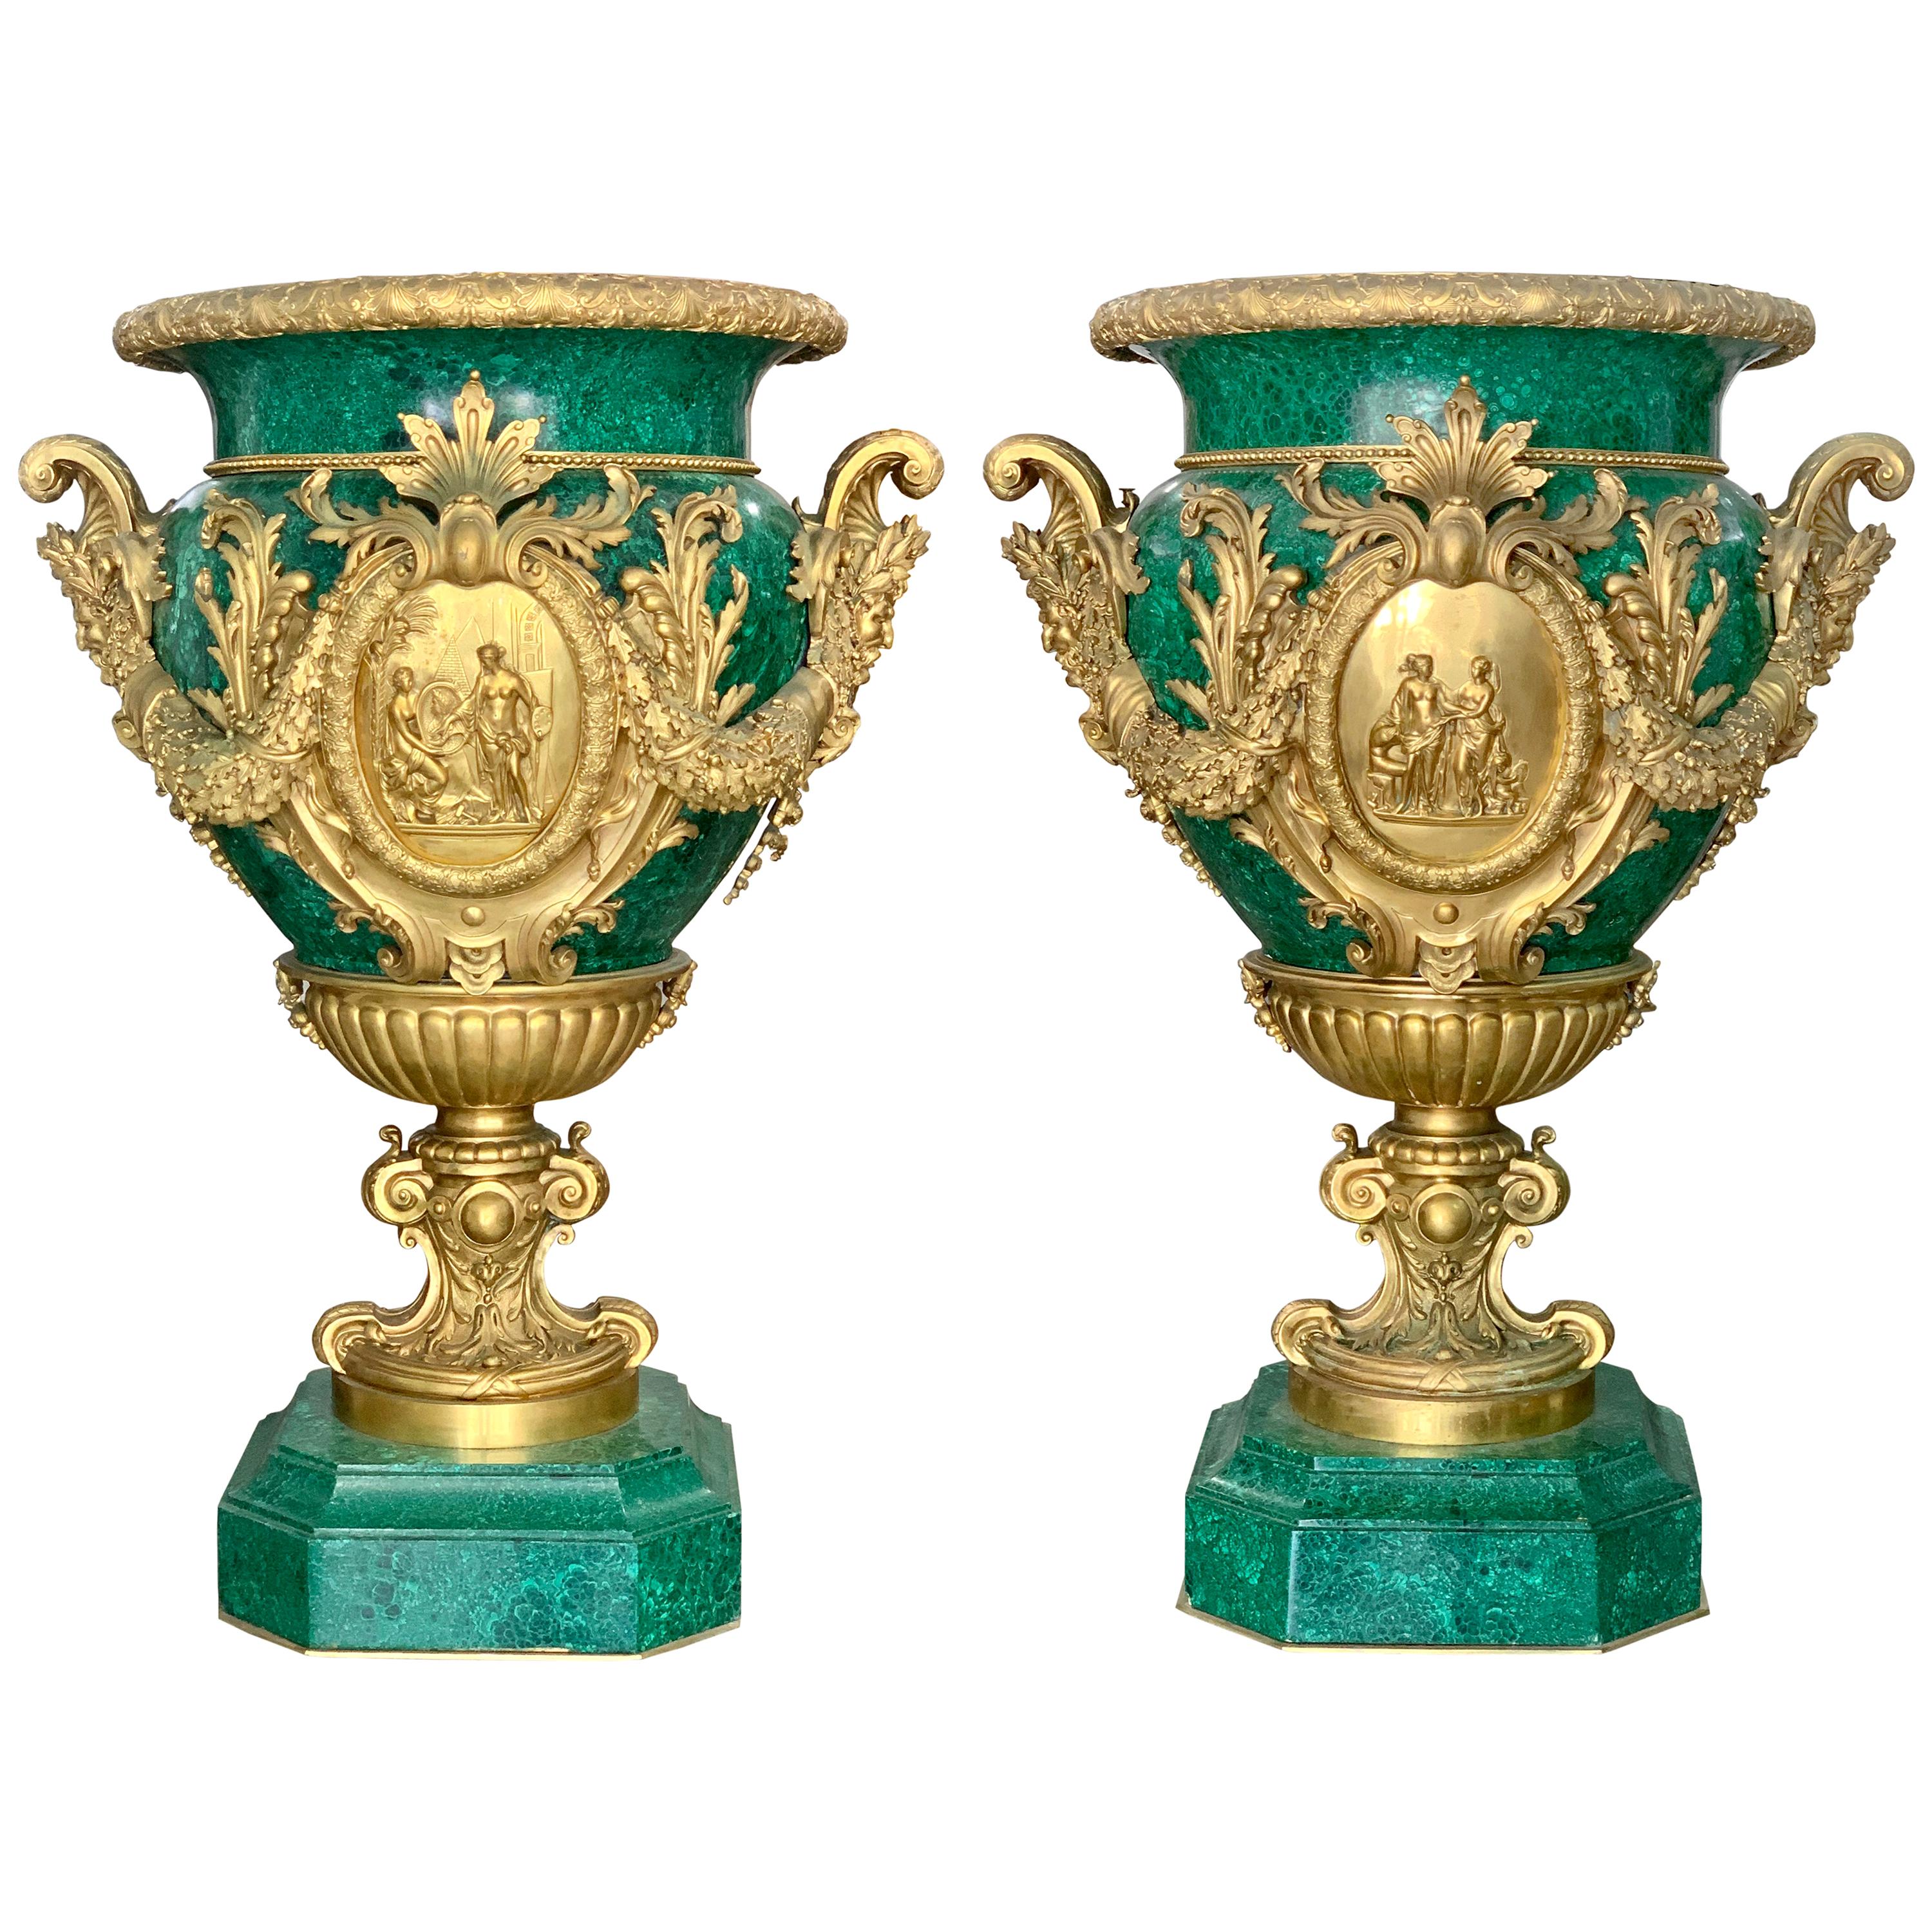 Pair of Monumental Gilt Bronze-Mounted Malachite Urns